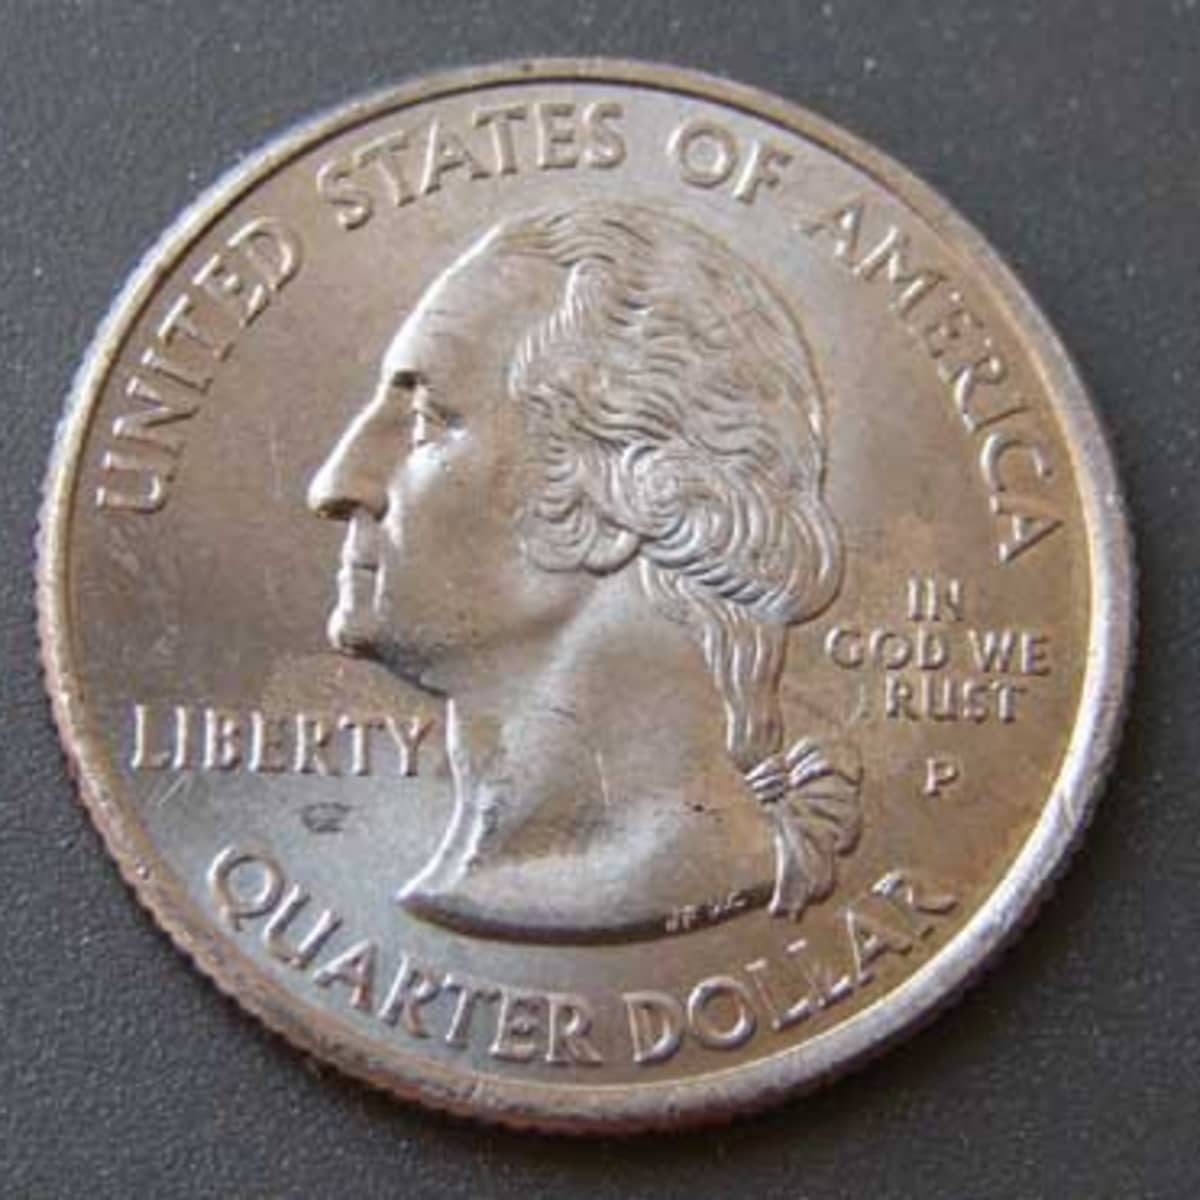 Statehood  US Quarter  Coin NORTH CAROLINA 2001-P  BU Mint State